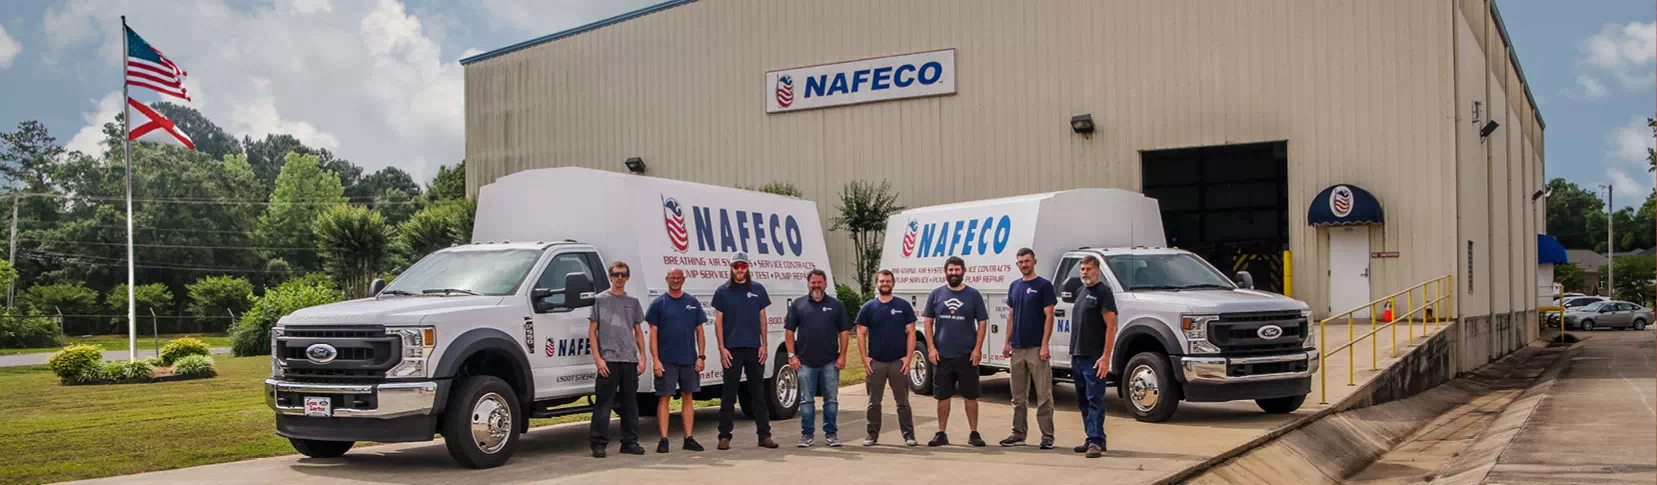 The NAFECO Service Team